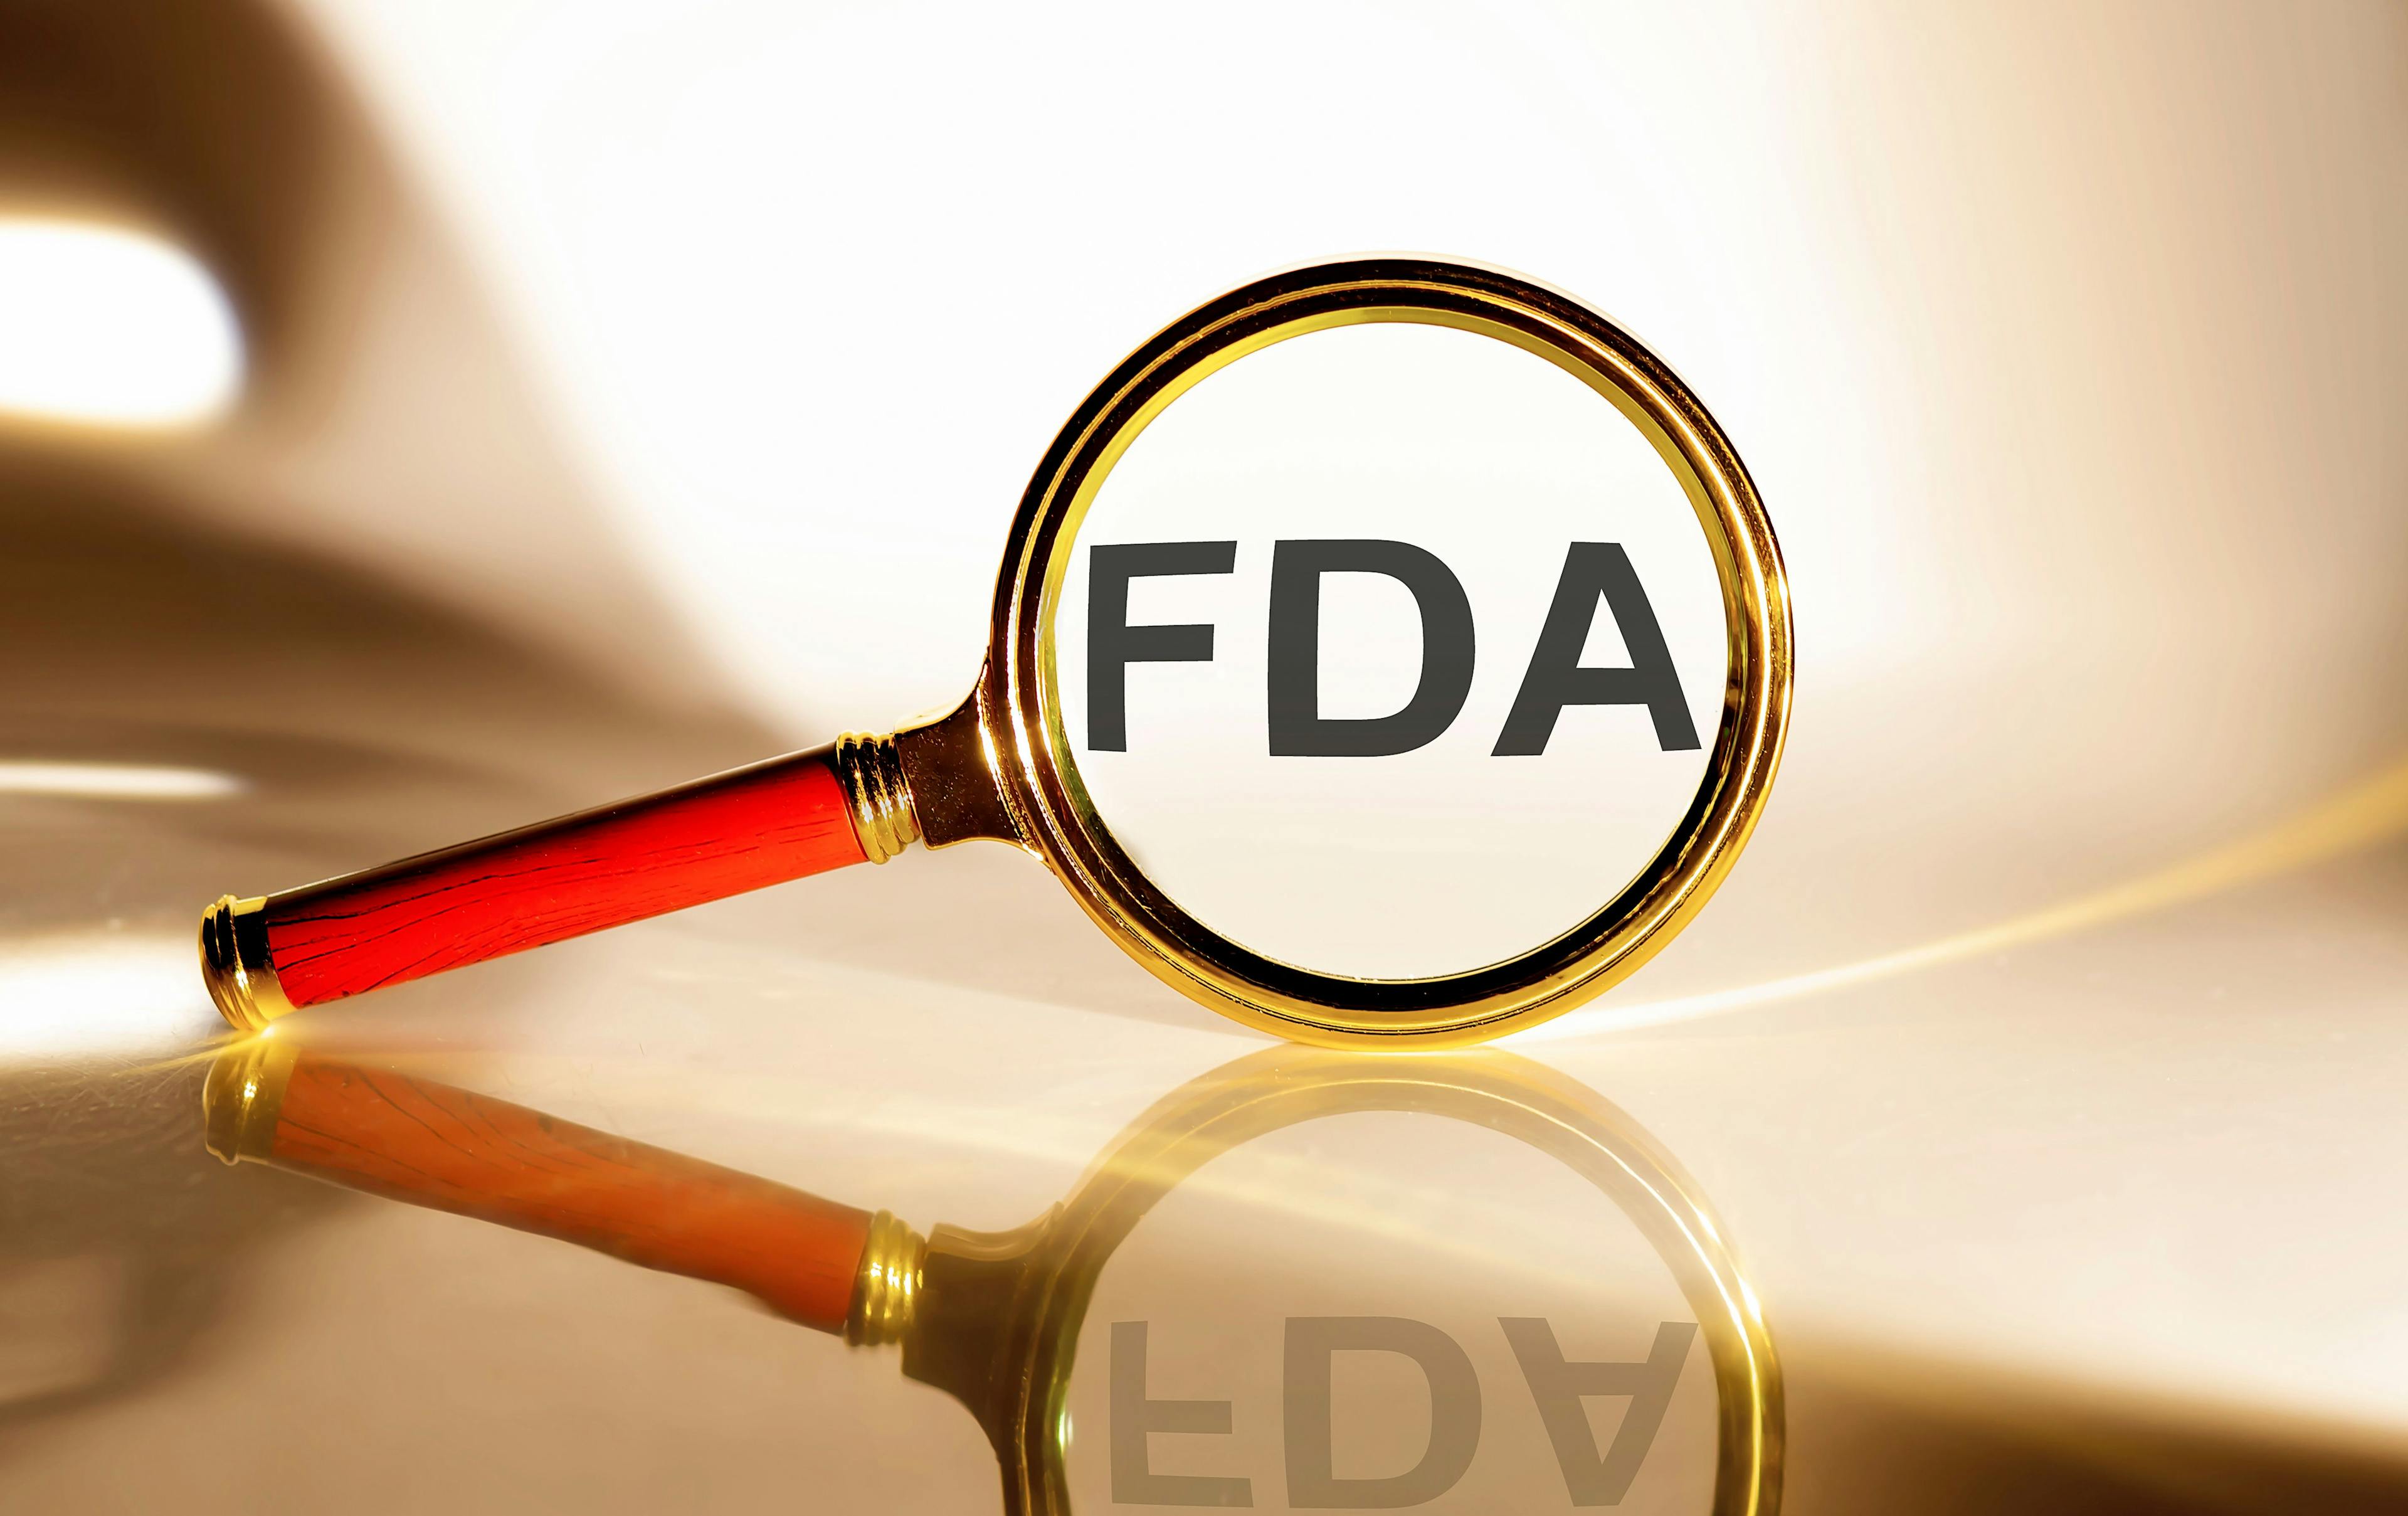 Bausch + Lomb, Novaliq announce U.S. FDA filing acceptance for investigational treatment NOV03